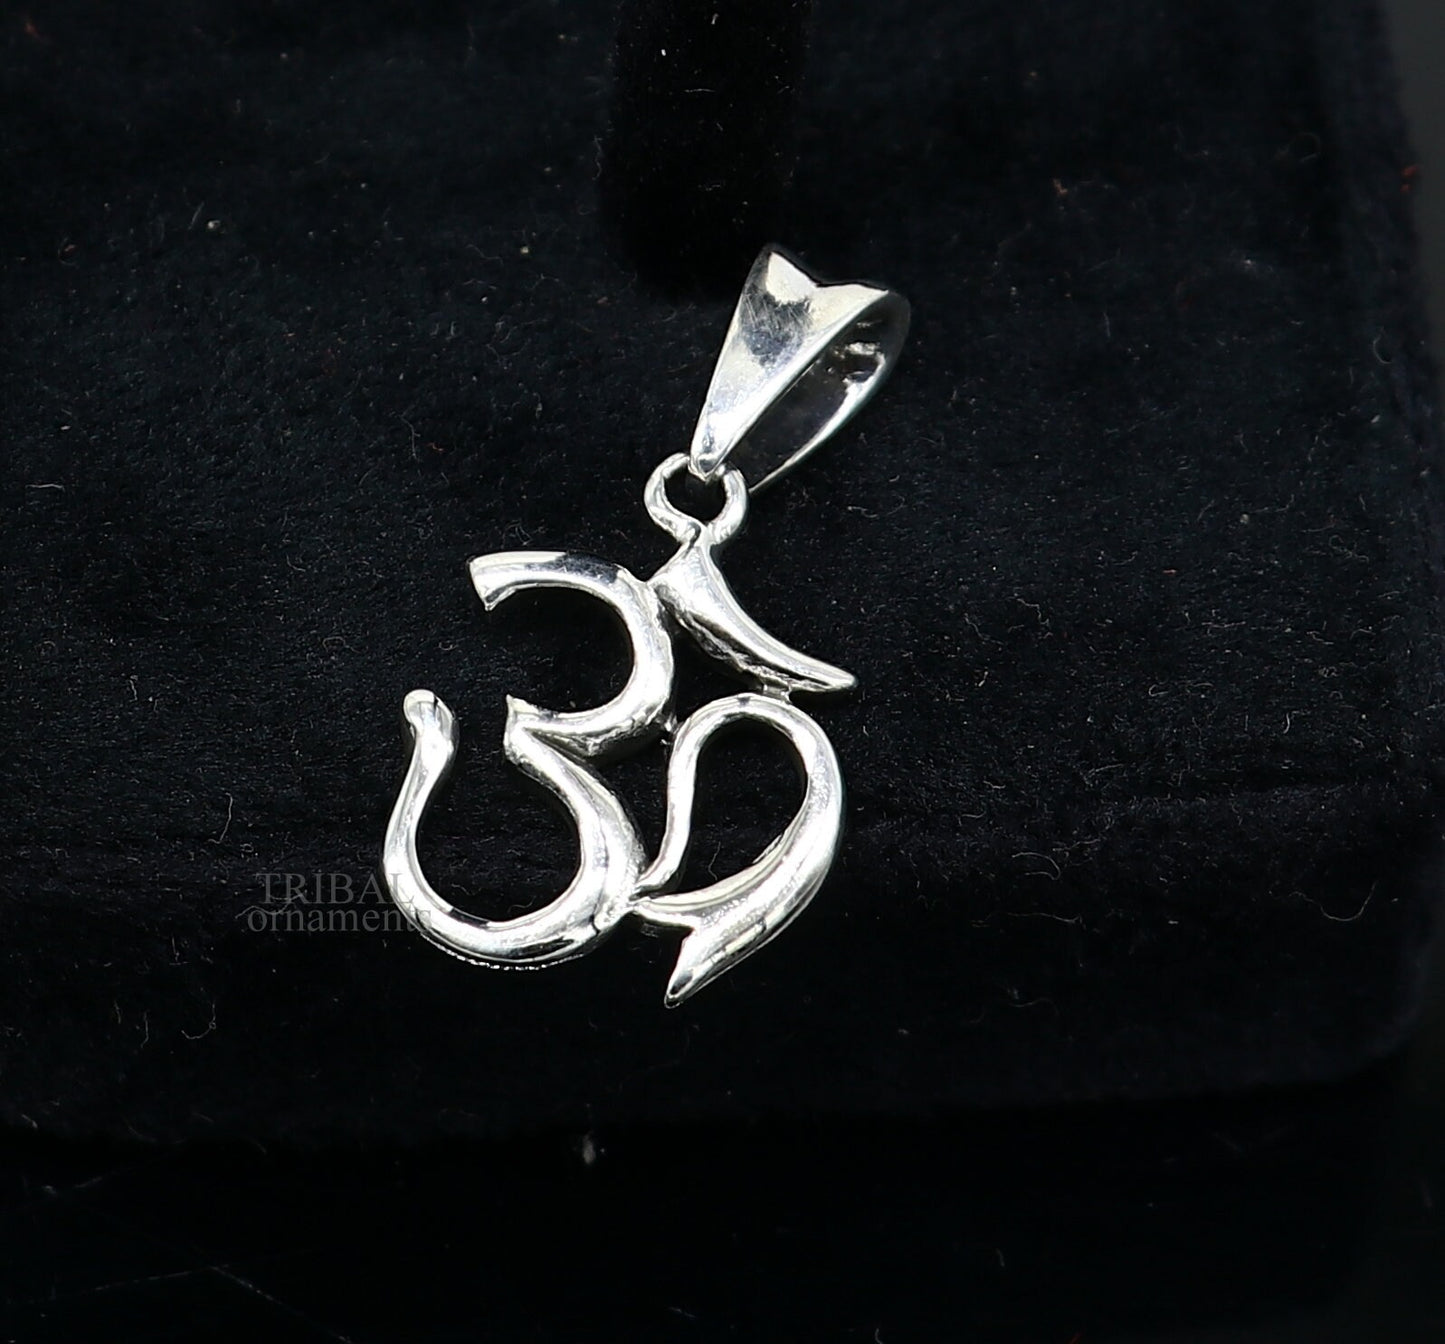 925 sterling silver handmade Hindu mantra 'Aum' OM pendant, amazing stylish unisex pendant personalized jewelry tribal jewelry ssp1585 - TRIBAL ORNAMENTS